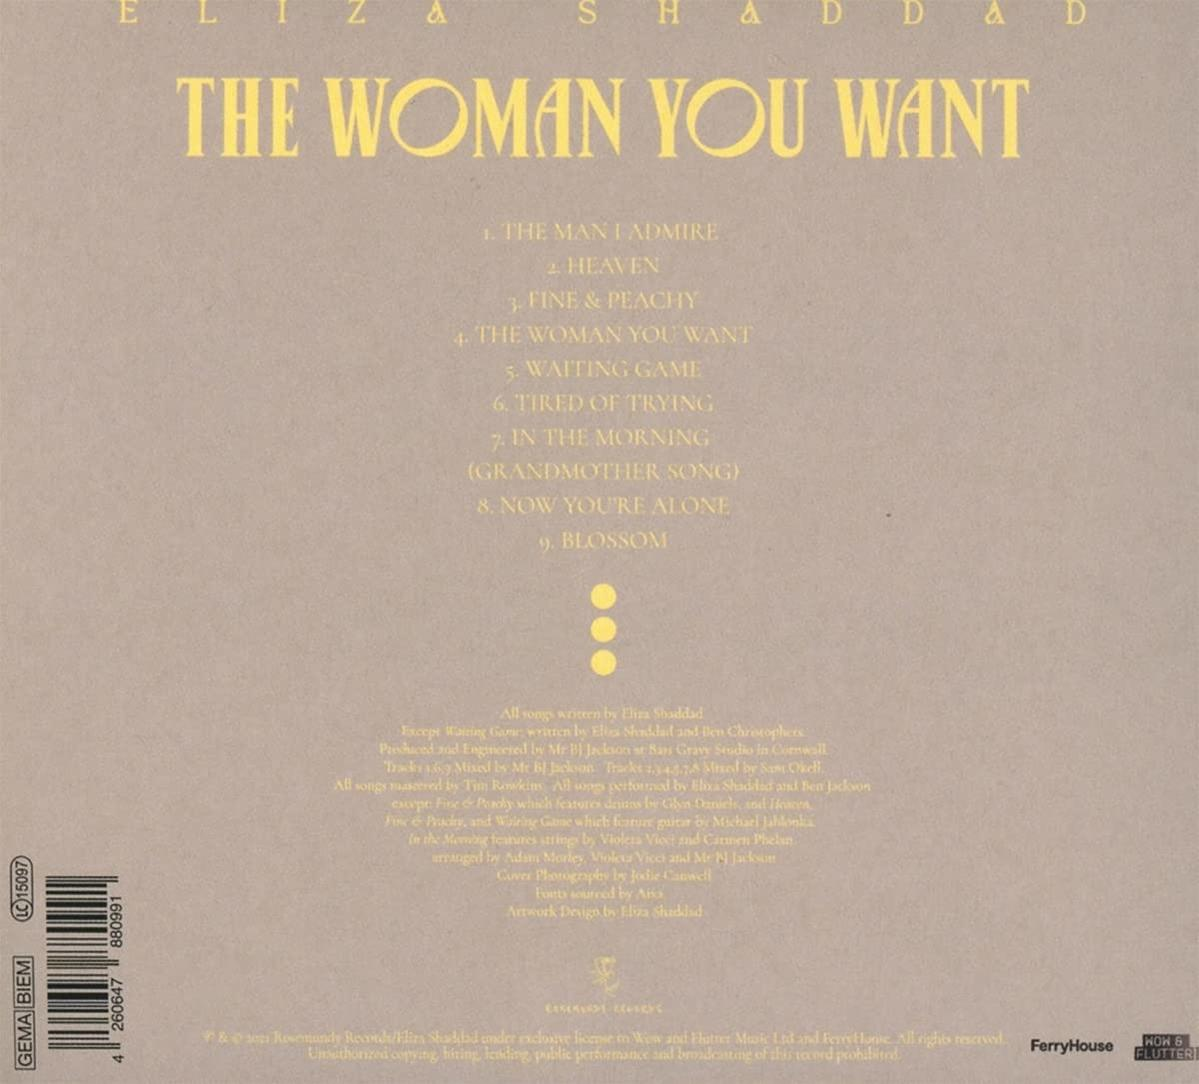 You - Eliza (CD) Shaddad The Want Woman -